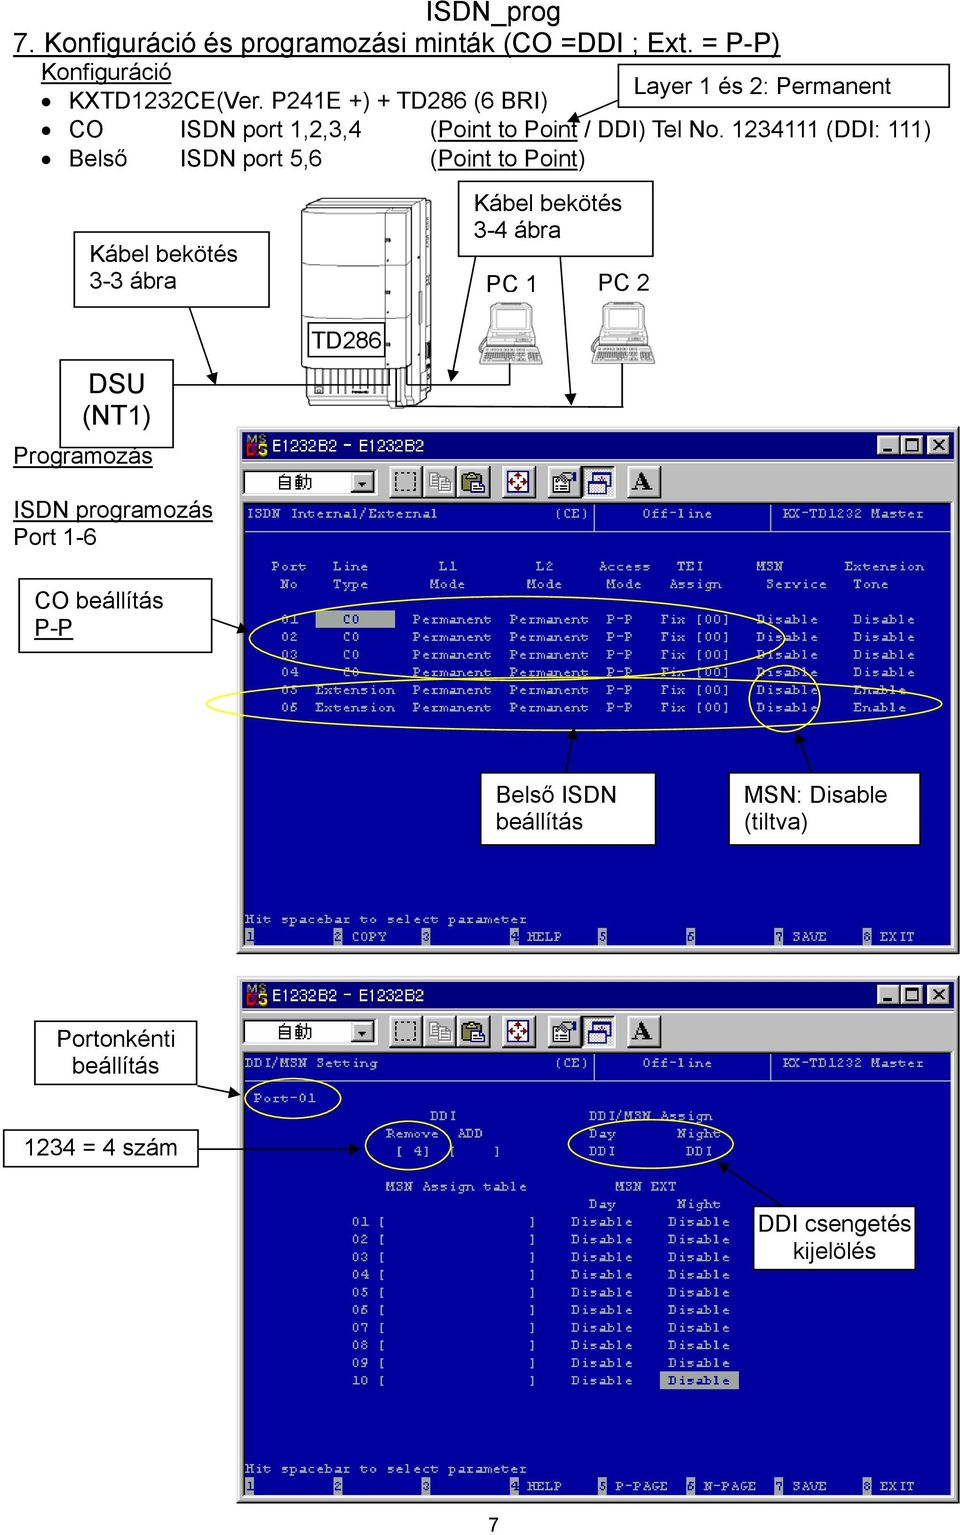 (DDI: ) Belső port 5,6 (Point to Point) Kábel bekötés - ábra Kábel bekötés - ábra PC PC DSU (NT)